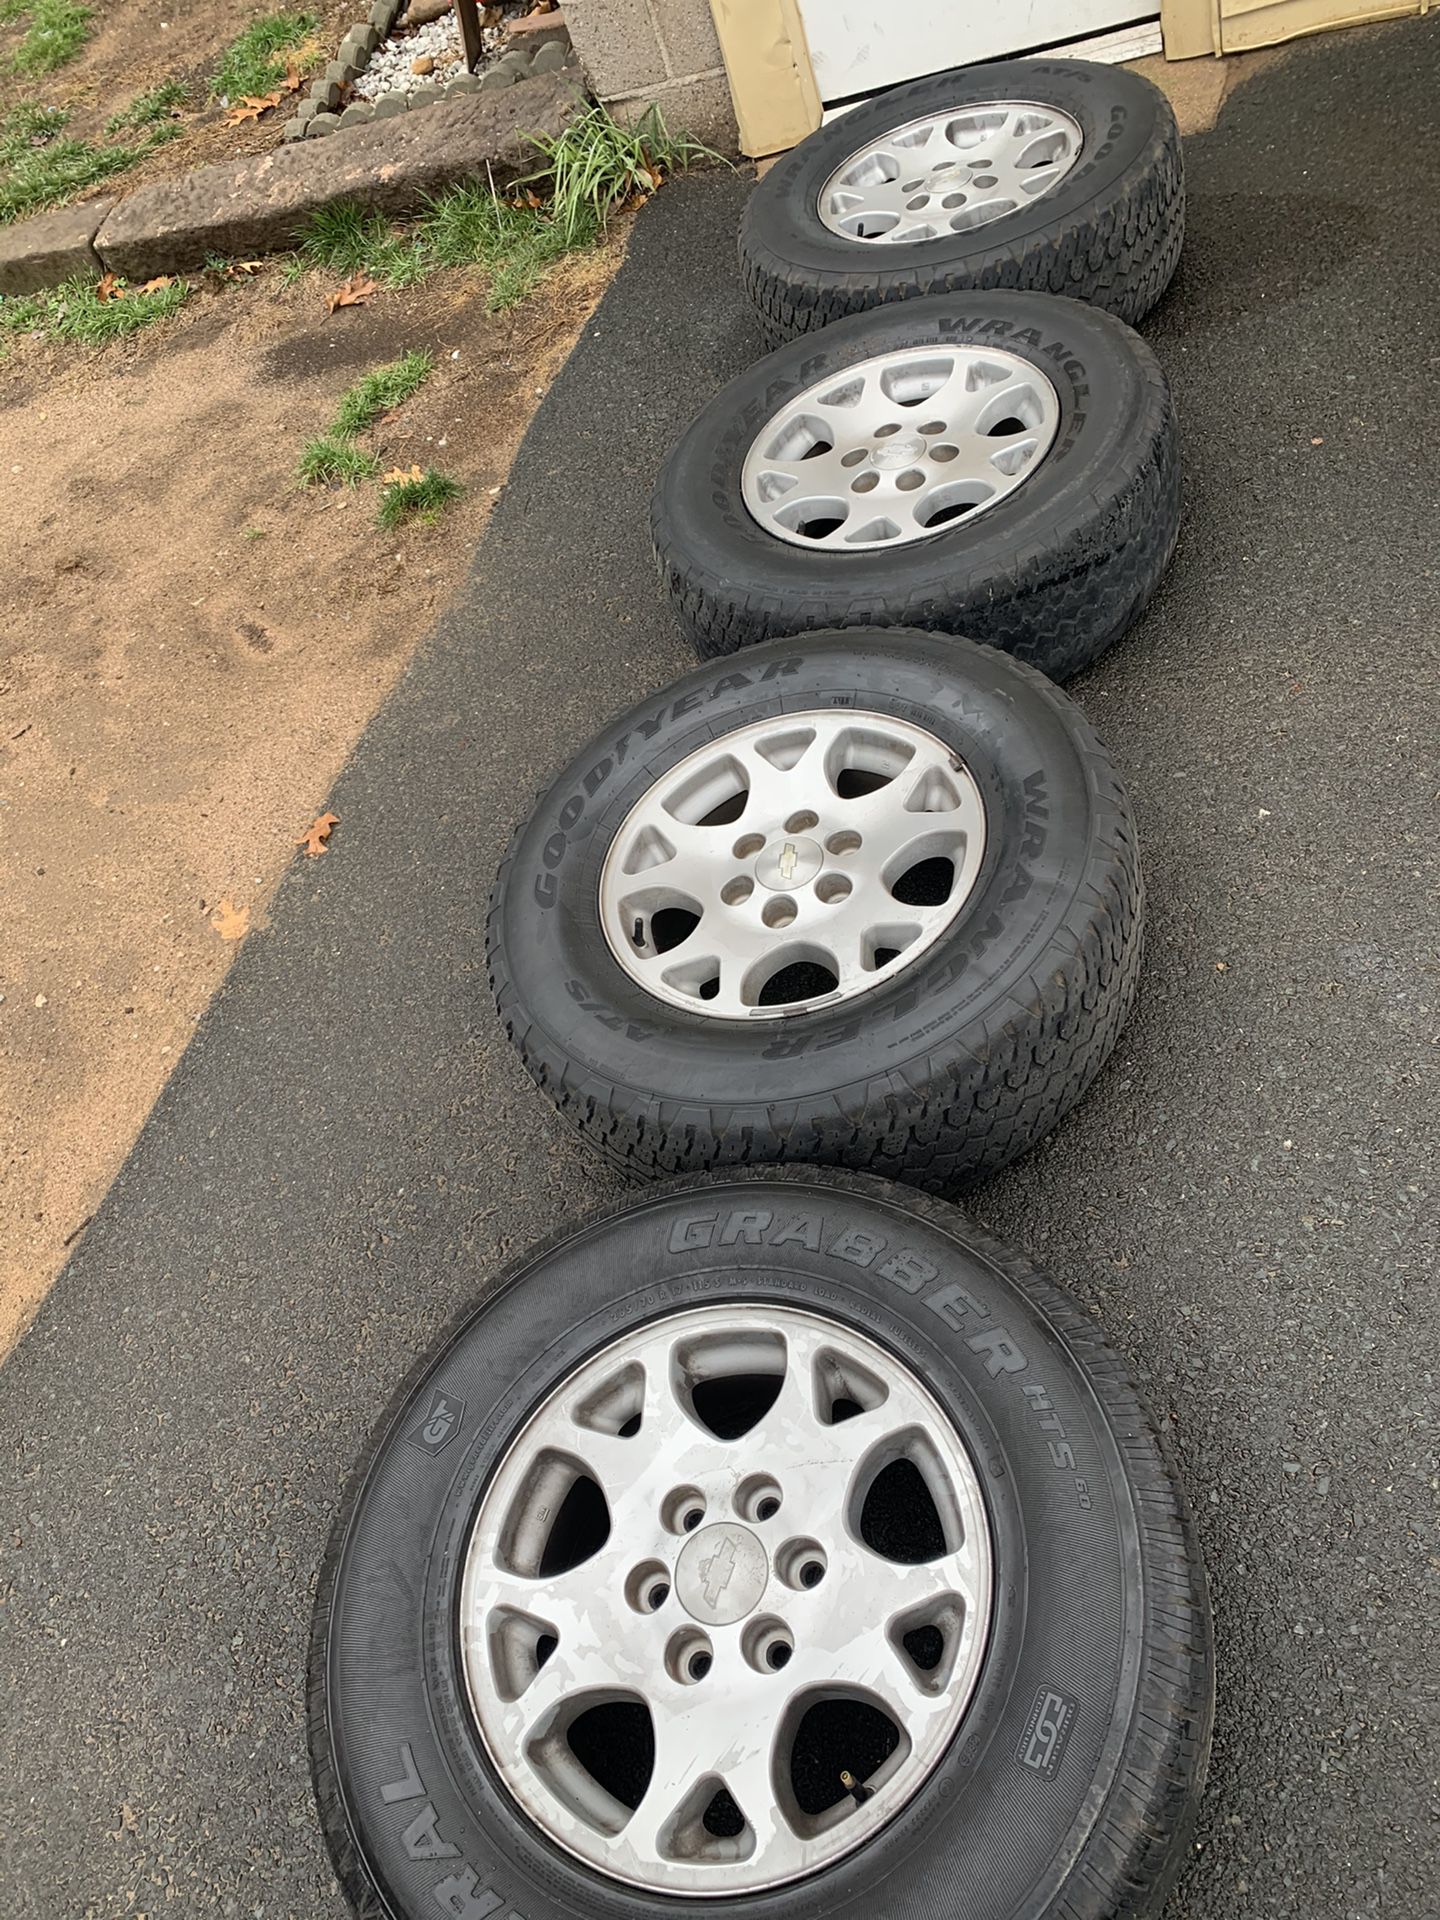 Chevy z71 wheels